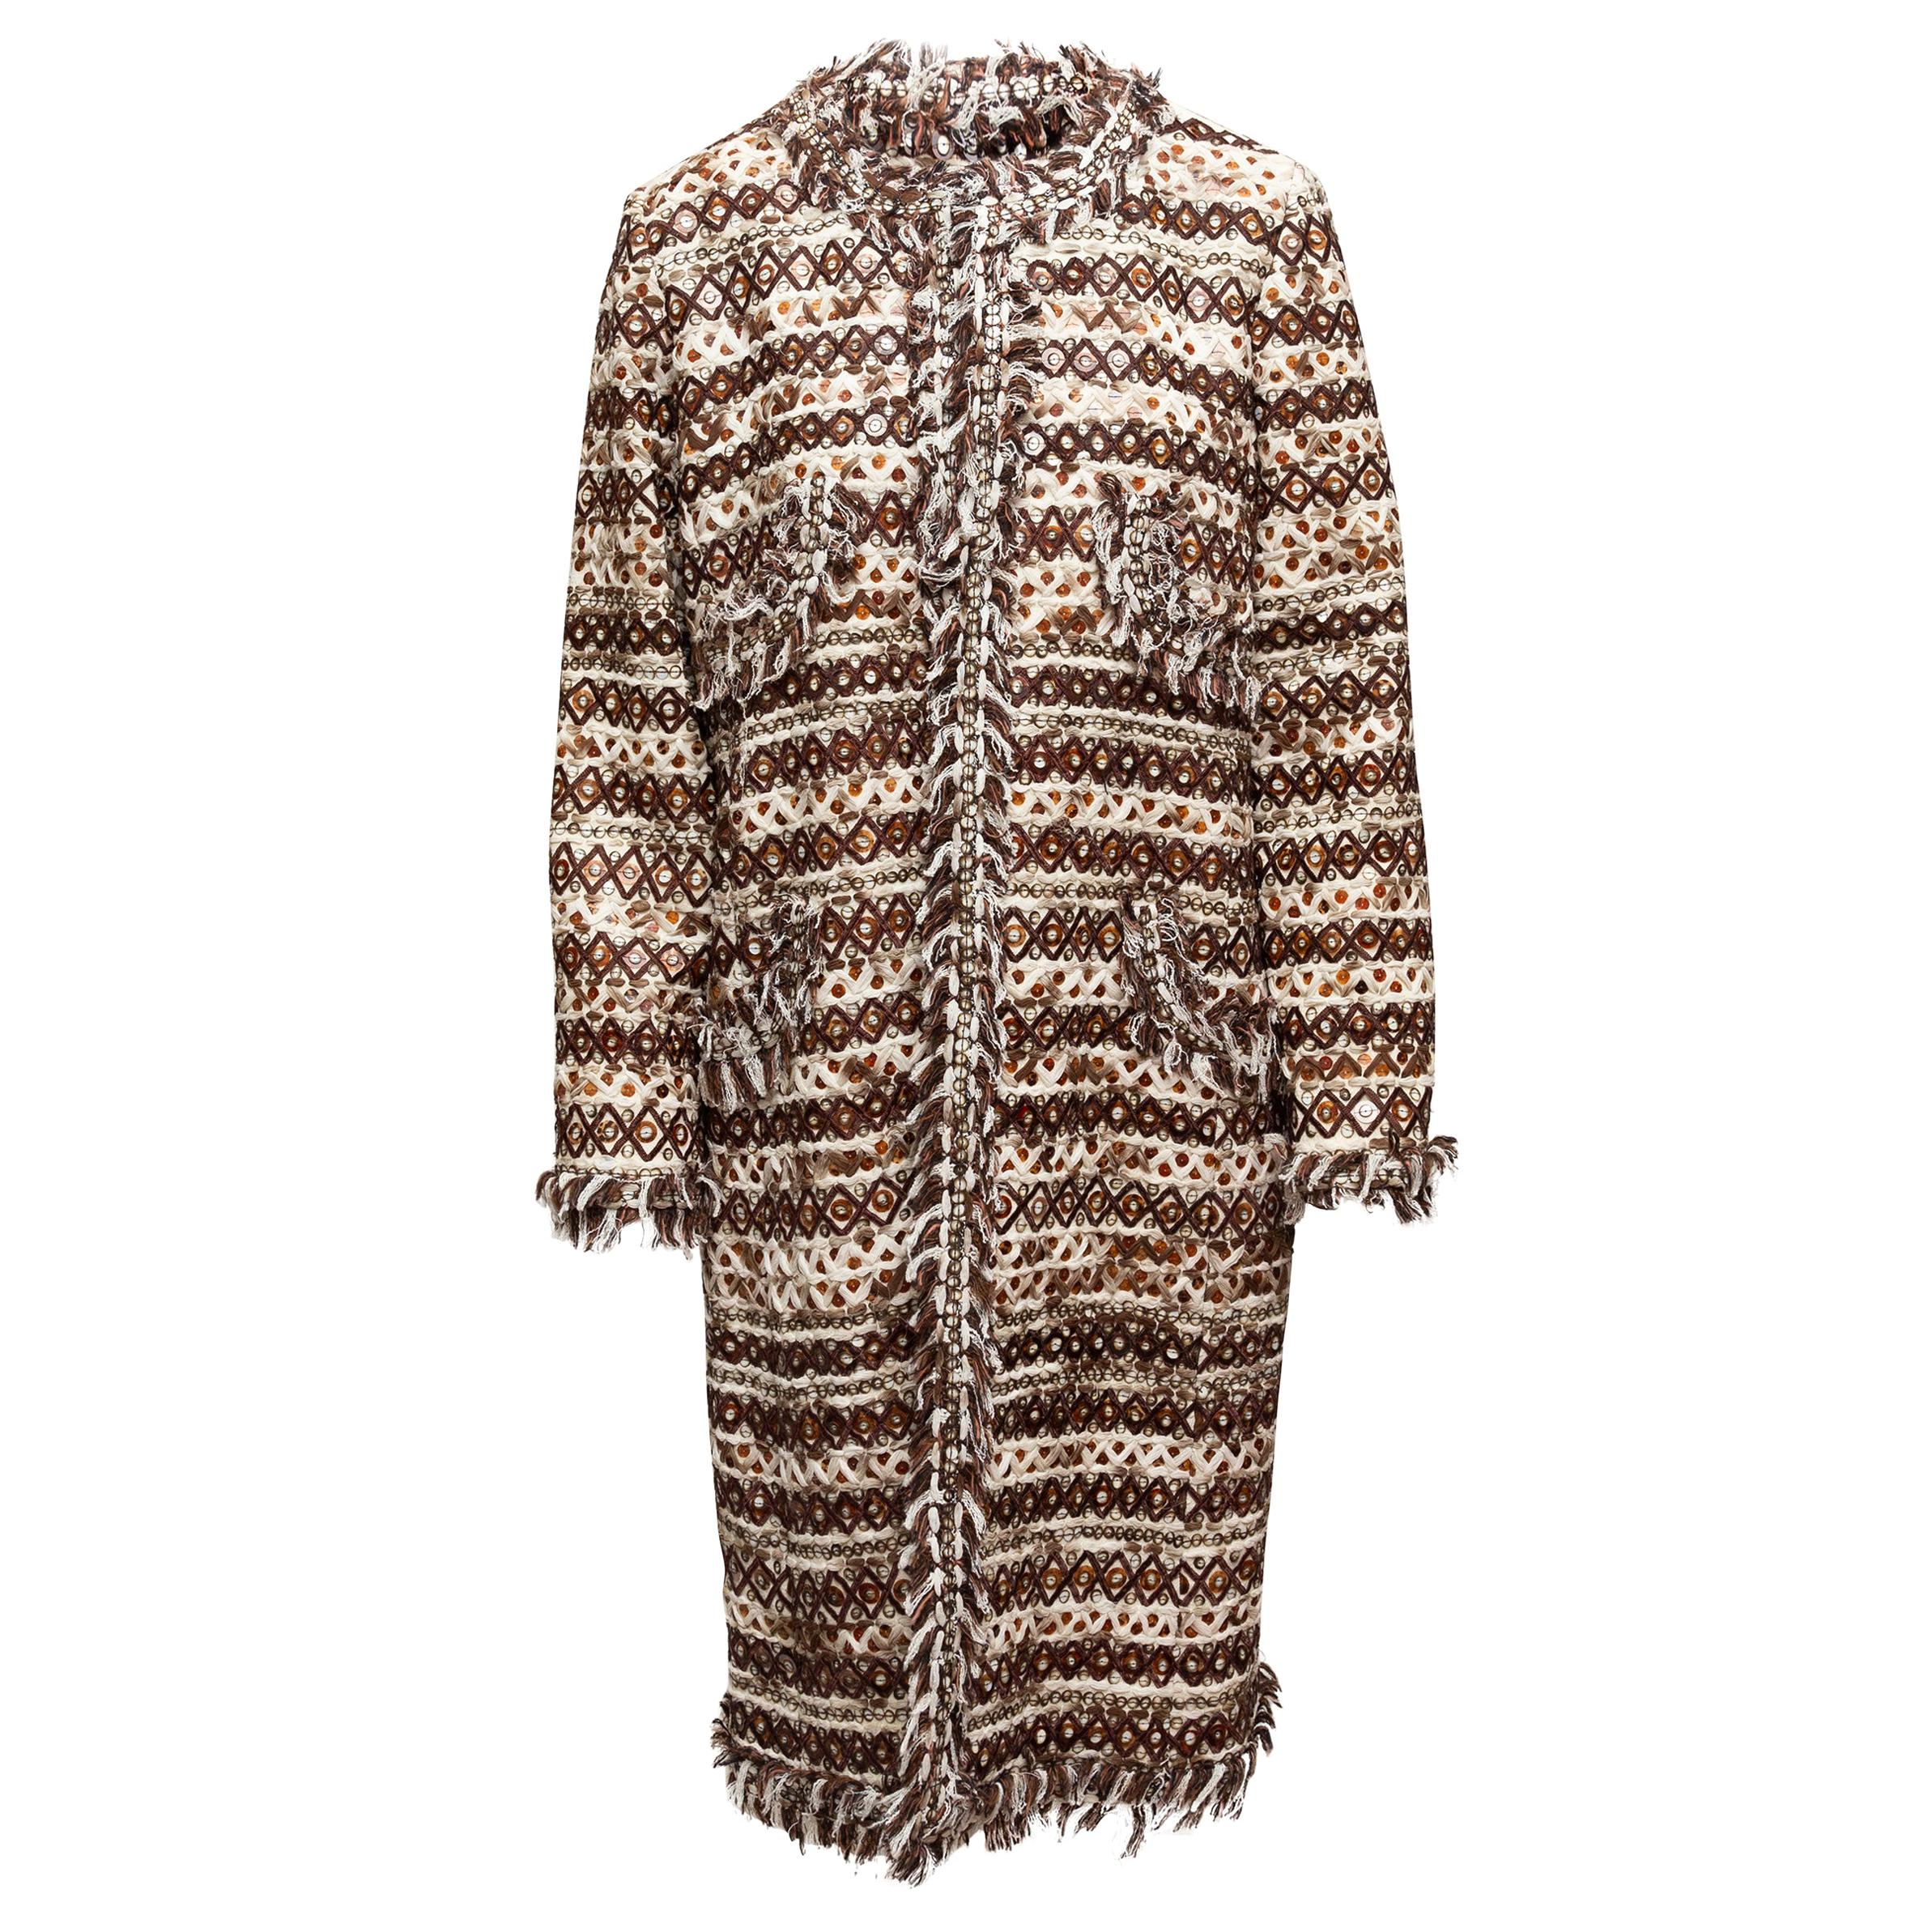 Oscar de la Renta Brown & Cream Textured Embellished Coat